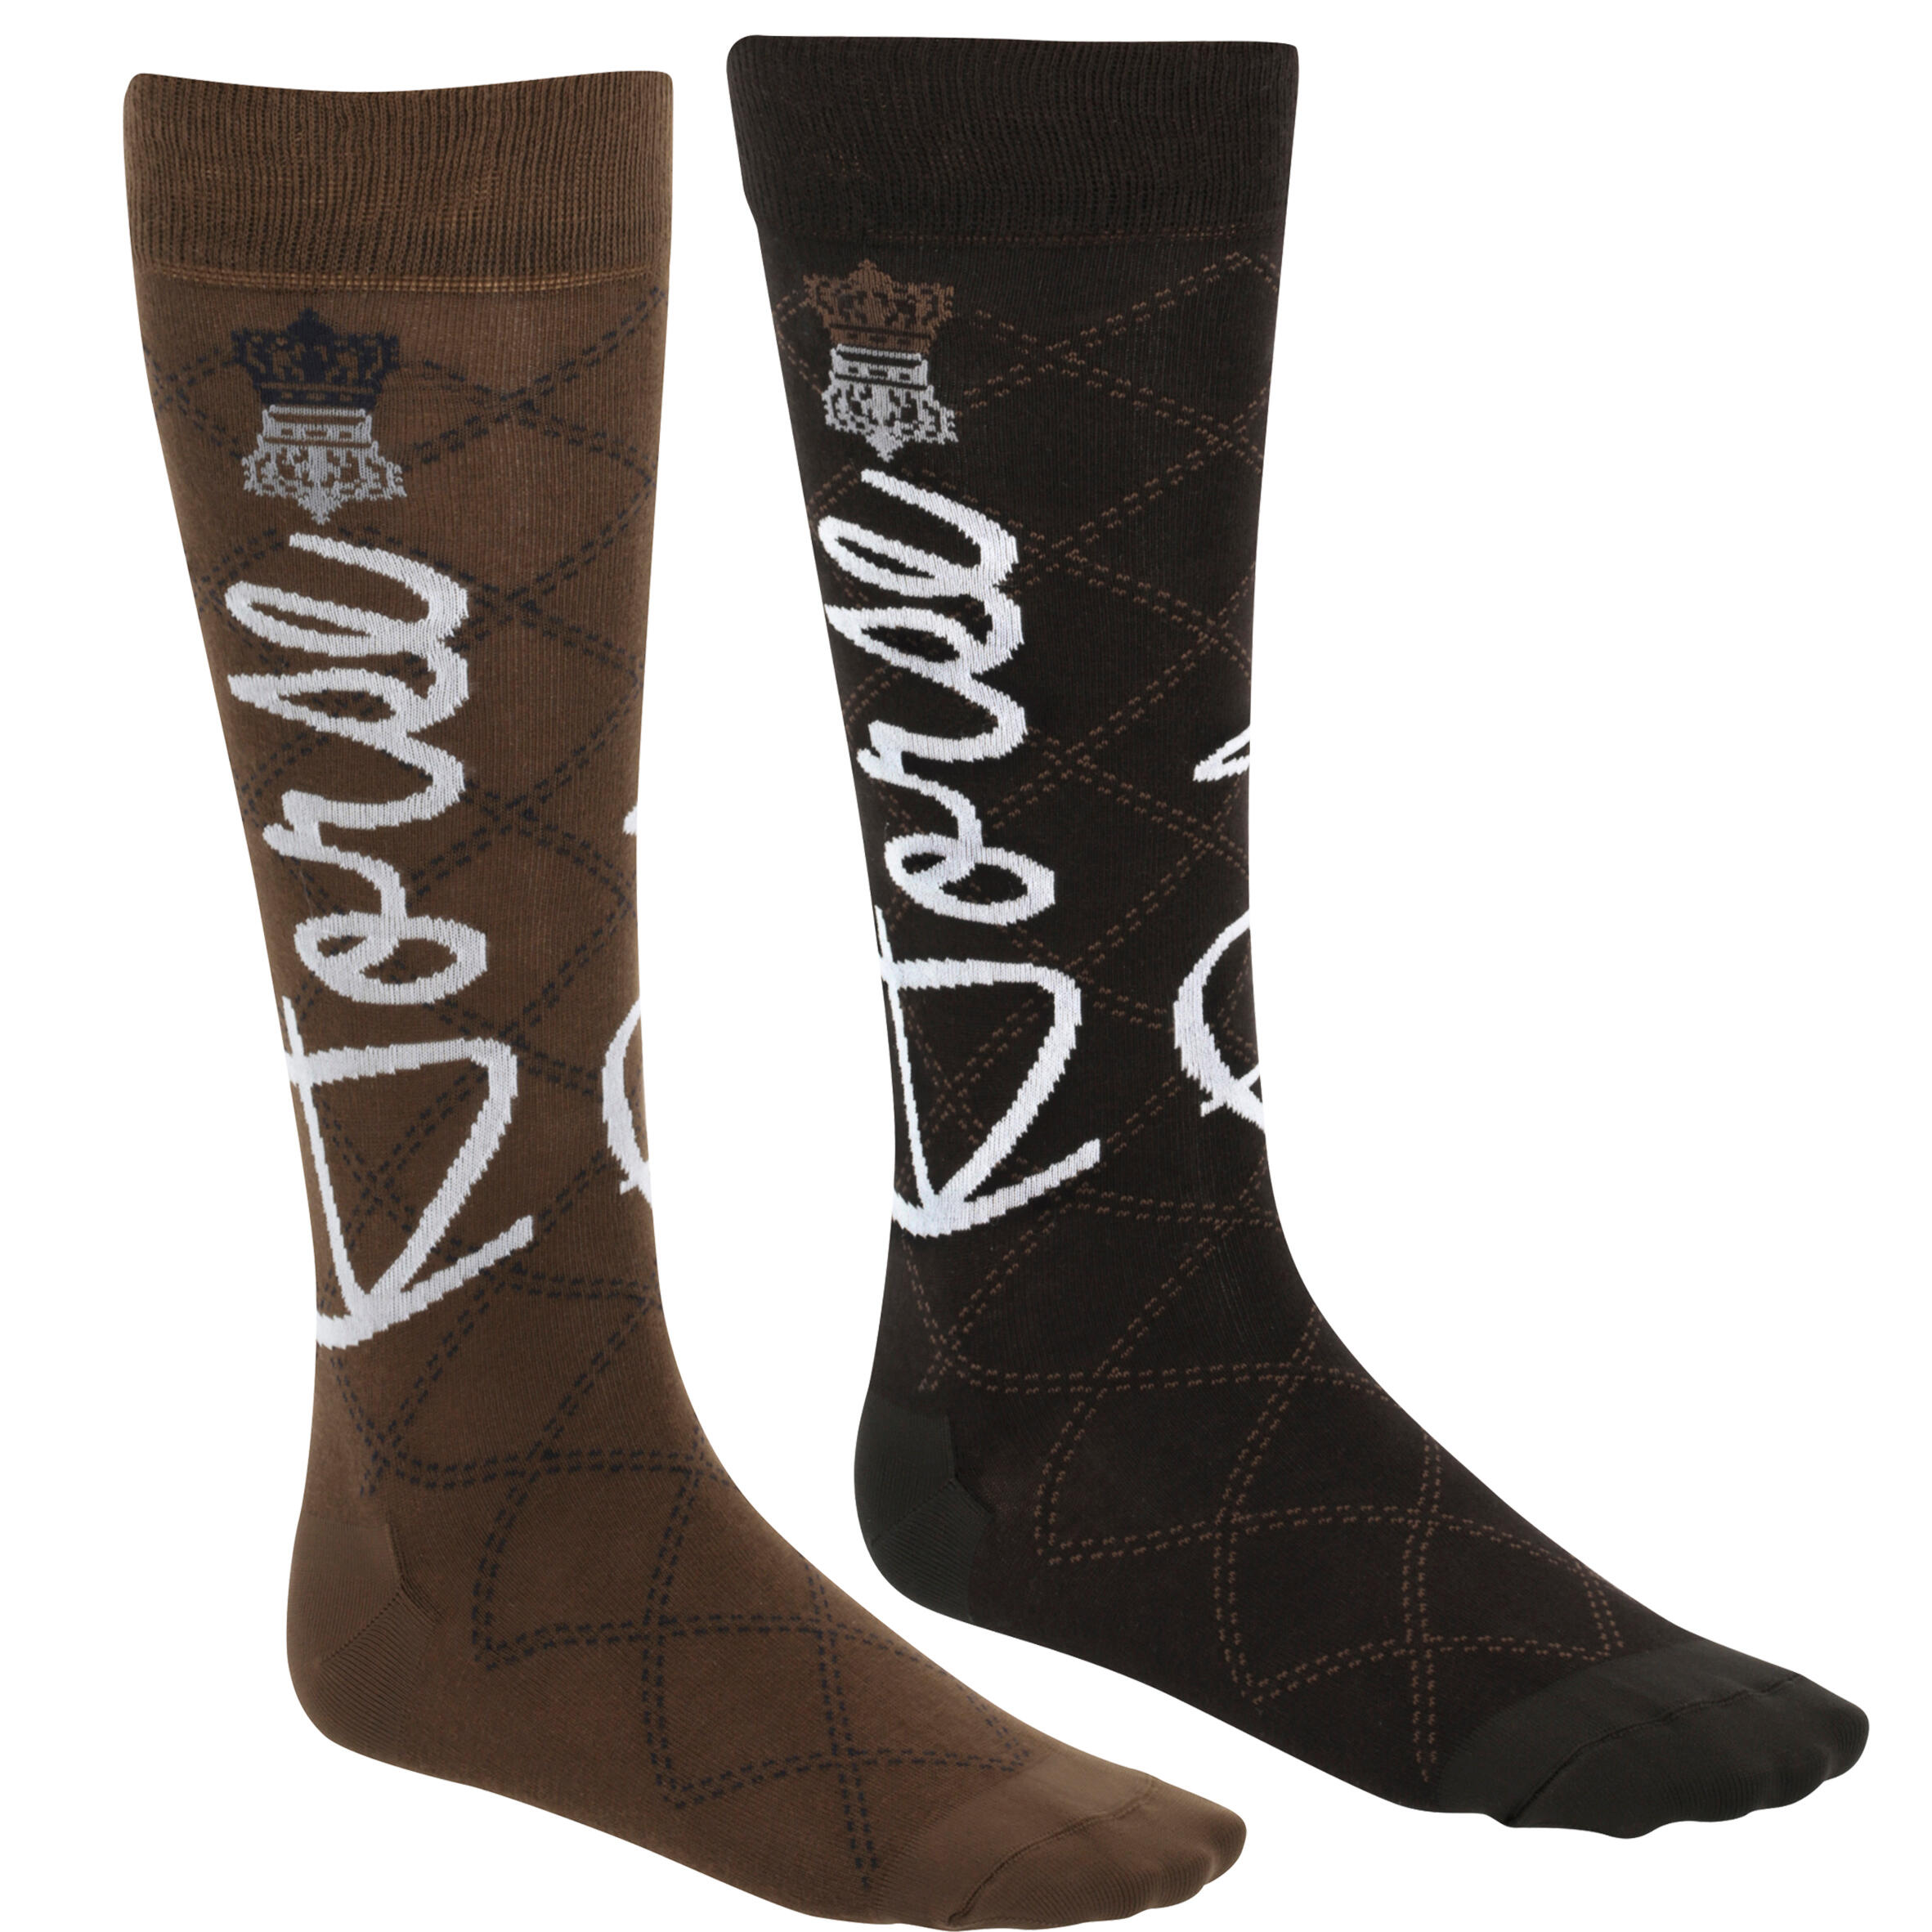 Adult Horse Riding Lightweight Socks 2-Pair Pack - Light Brown/Dark Brown 1/8